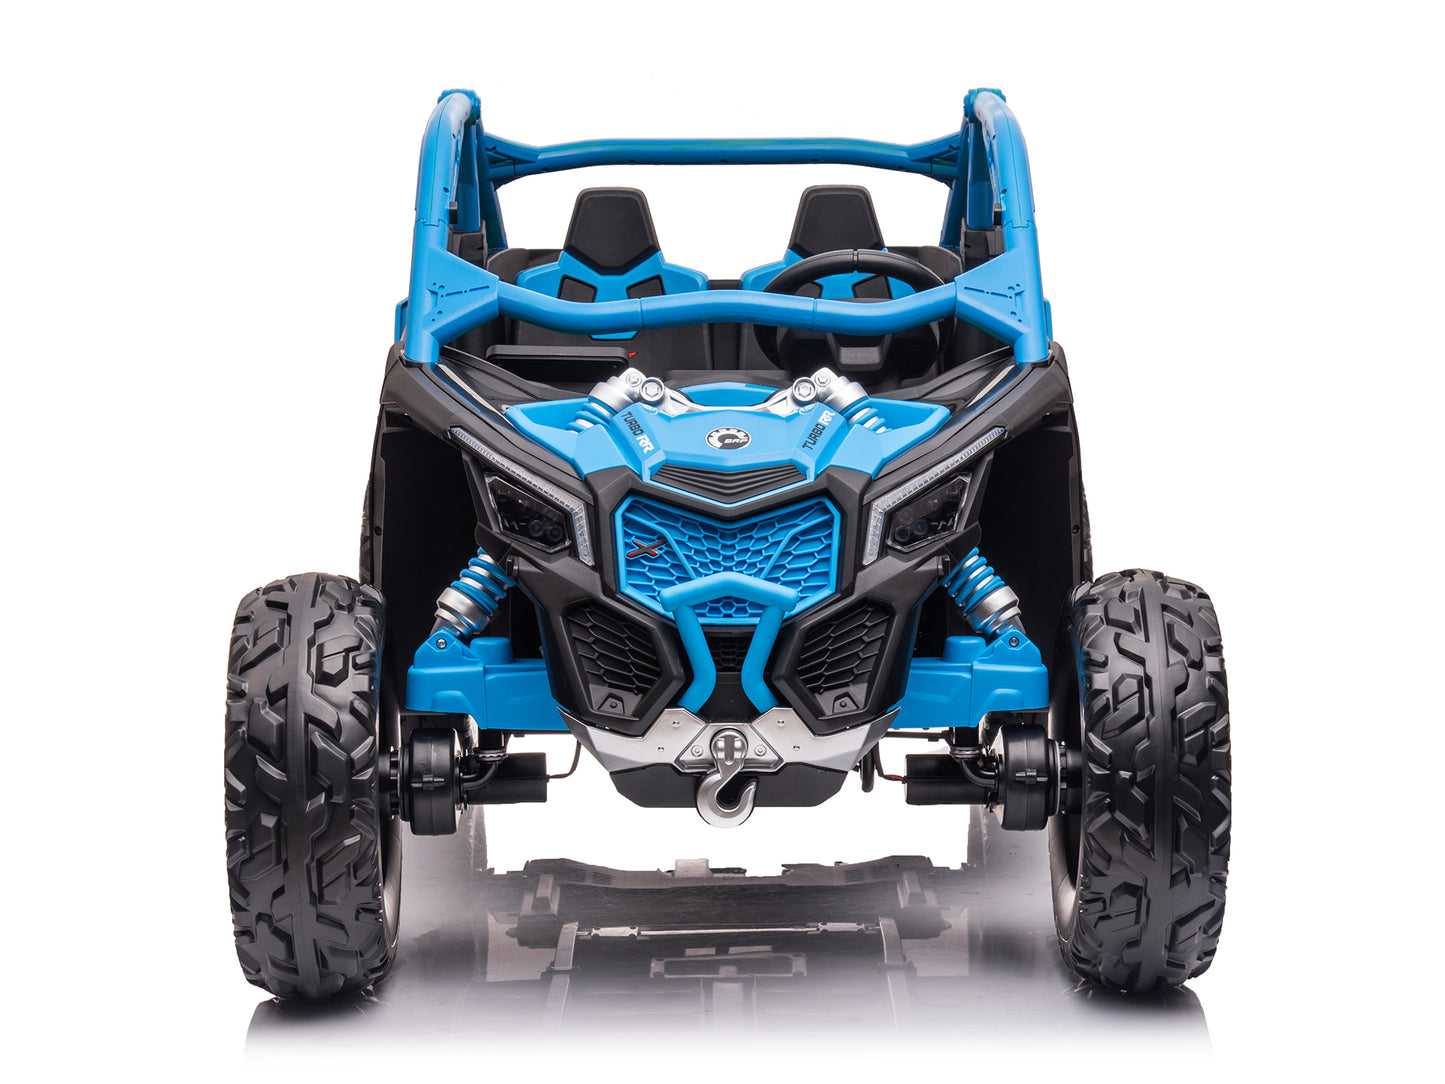 24V Can-Am Maverick X3 Kids Ride-On Buggy - Blue